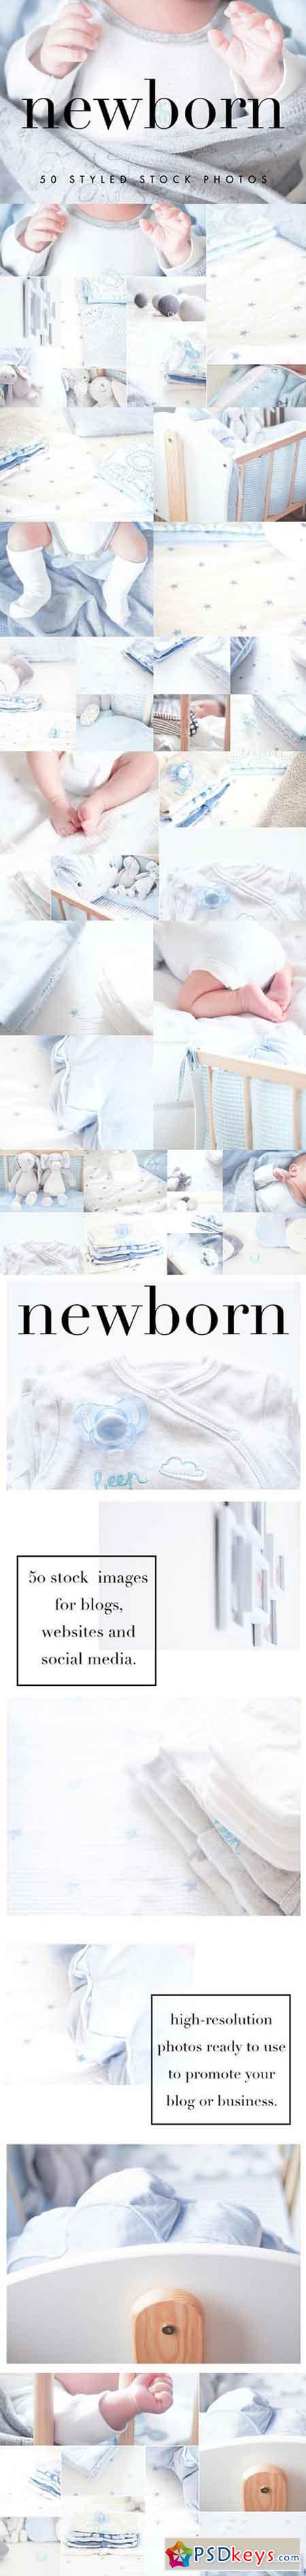 Newborn Baby Styled Stock Photos 1149843